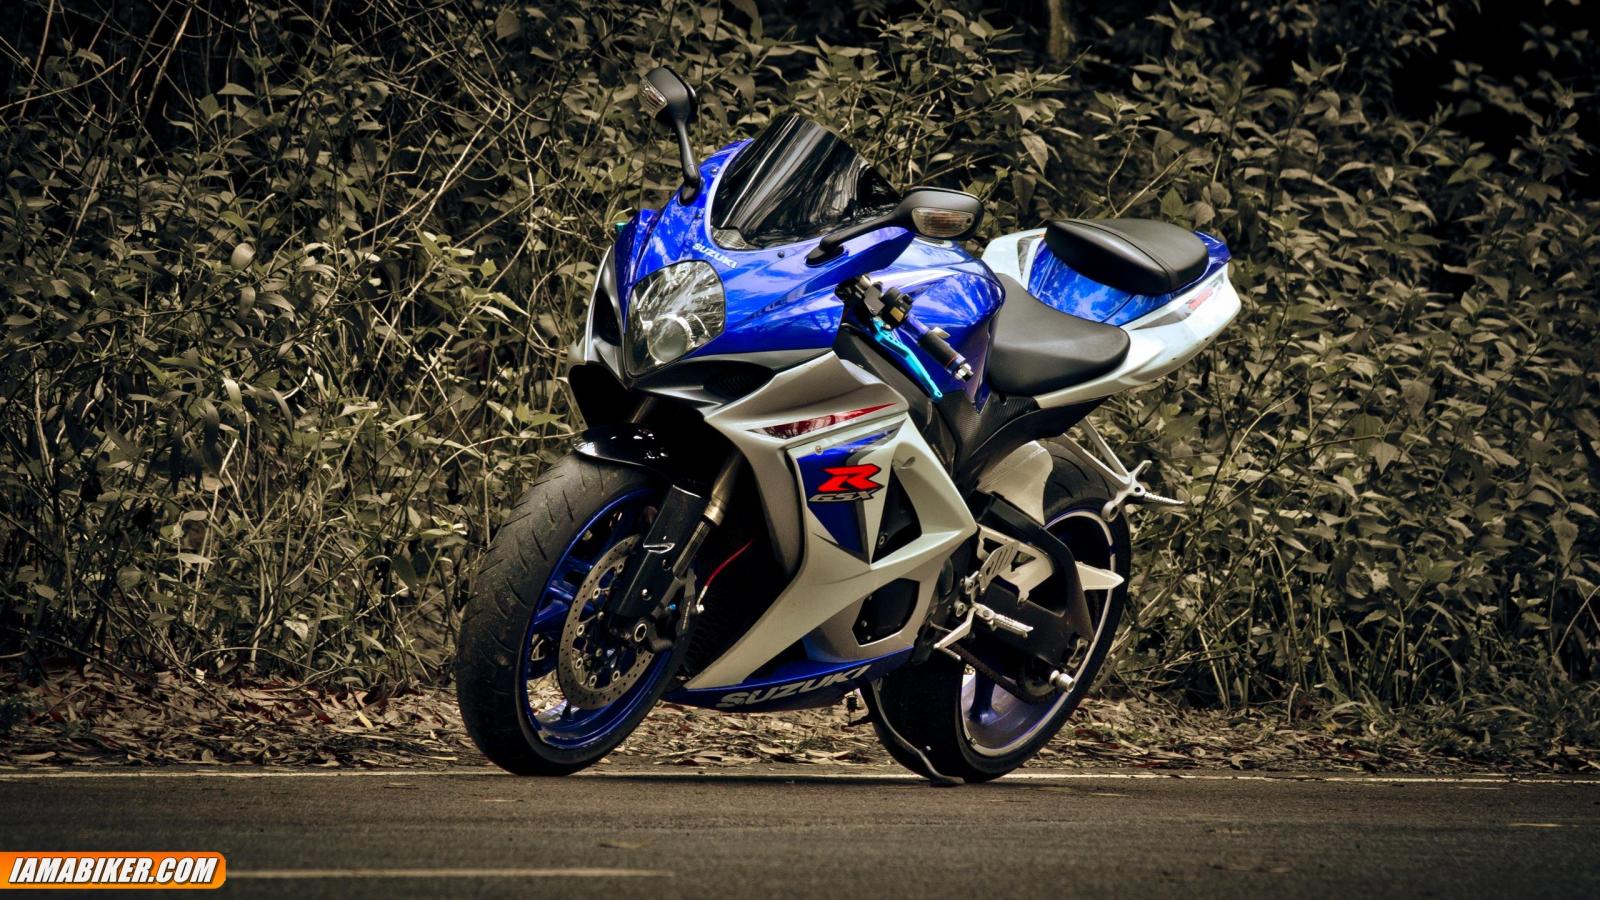 Тест-драйв мотоцикла Suzuki GSX-R1000 K9